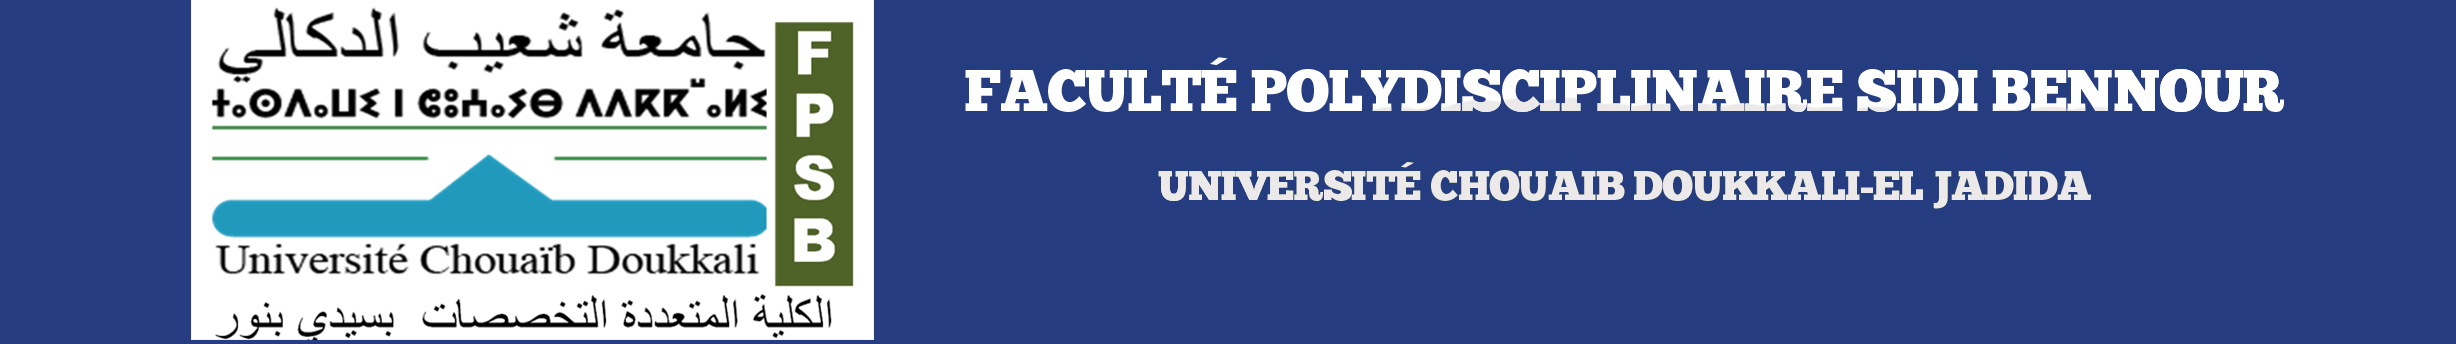 Faculté Polydisciplinaire Sidi Bennour